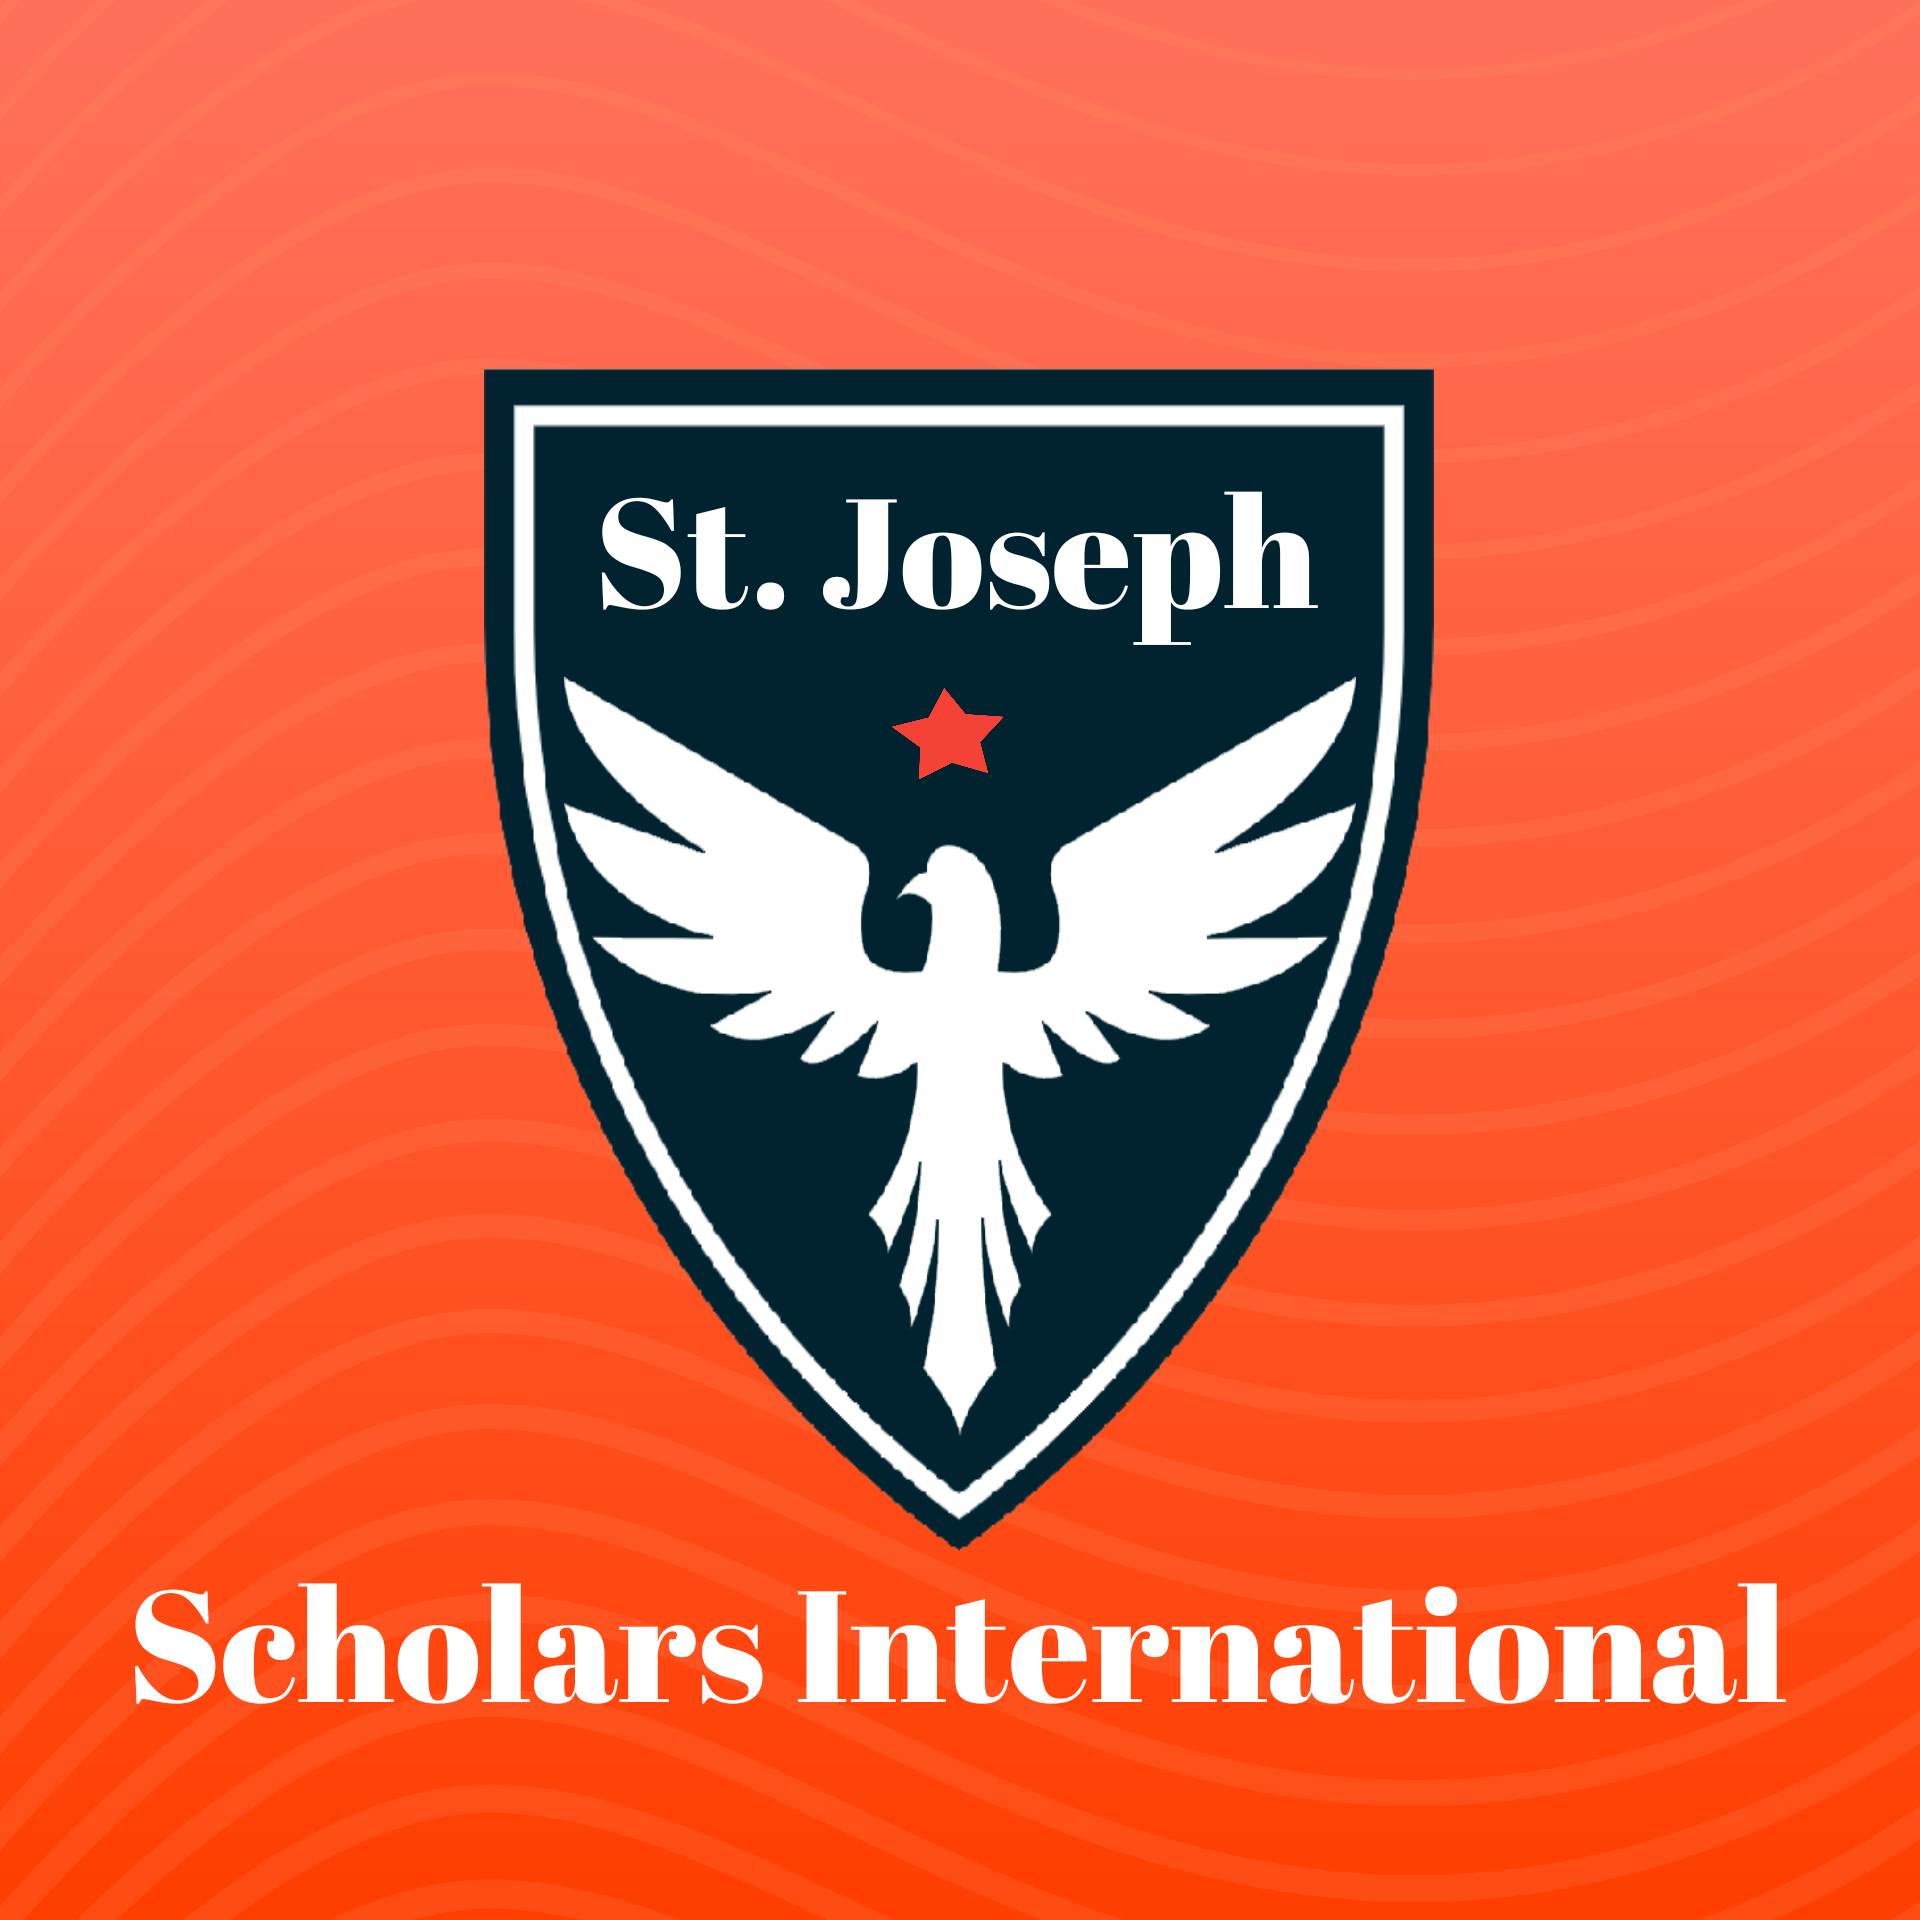 St. Joseph Scholars International의 기업로고